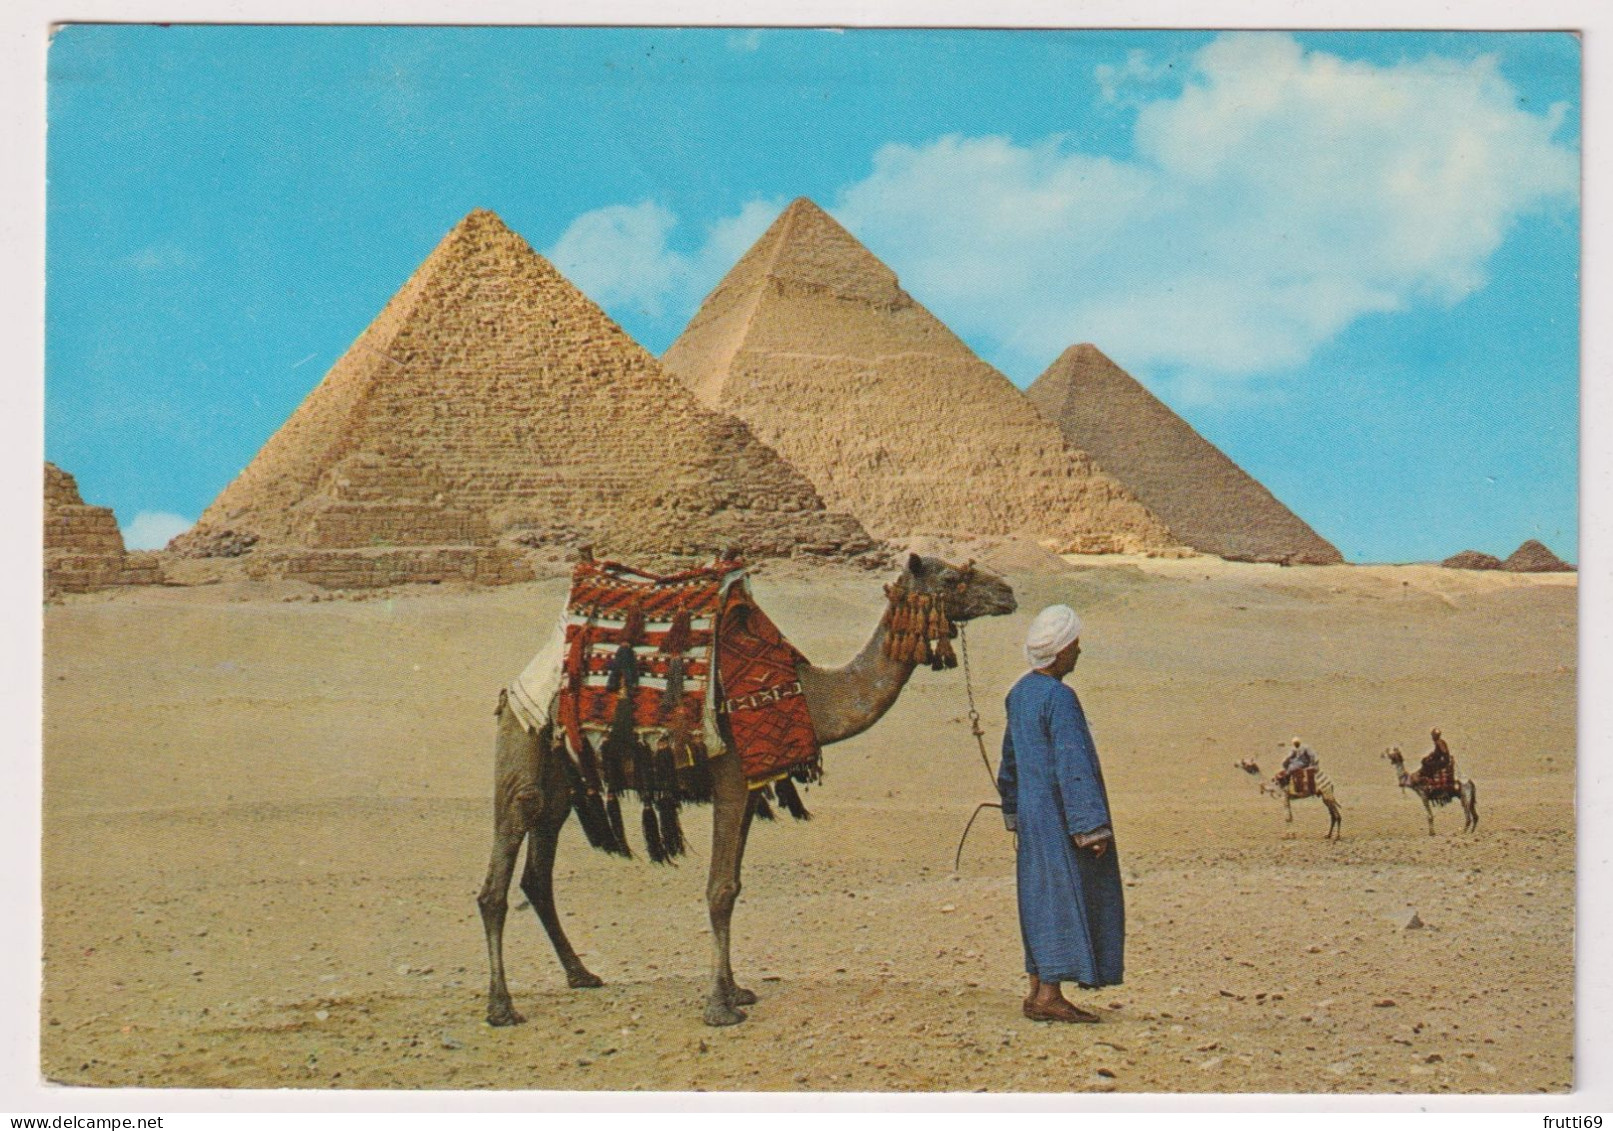 AK 198218 EGYPT - Giza - The Giza Pyramids - Pyramides